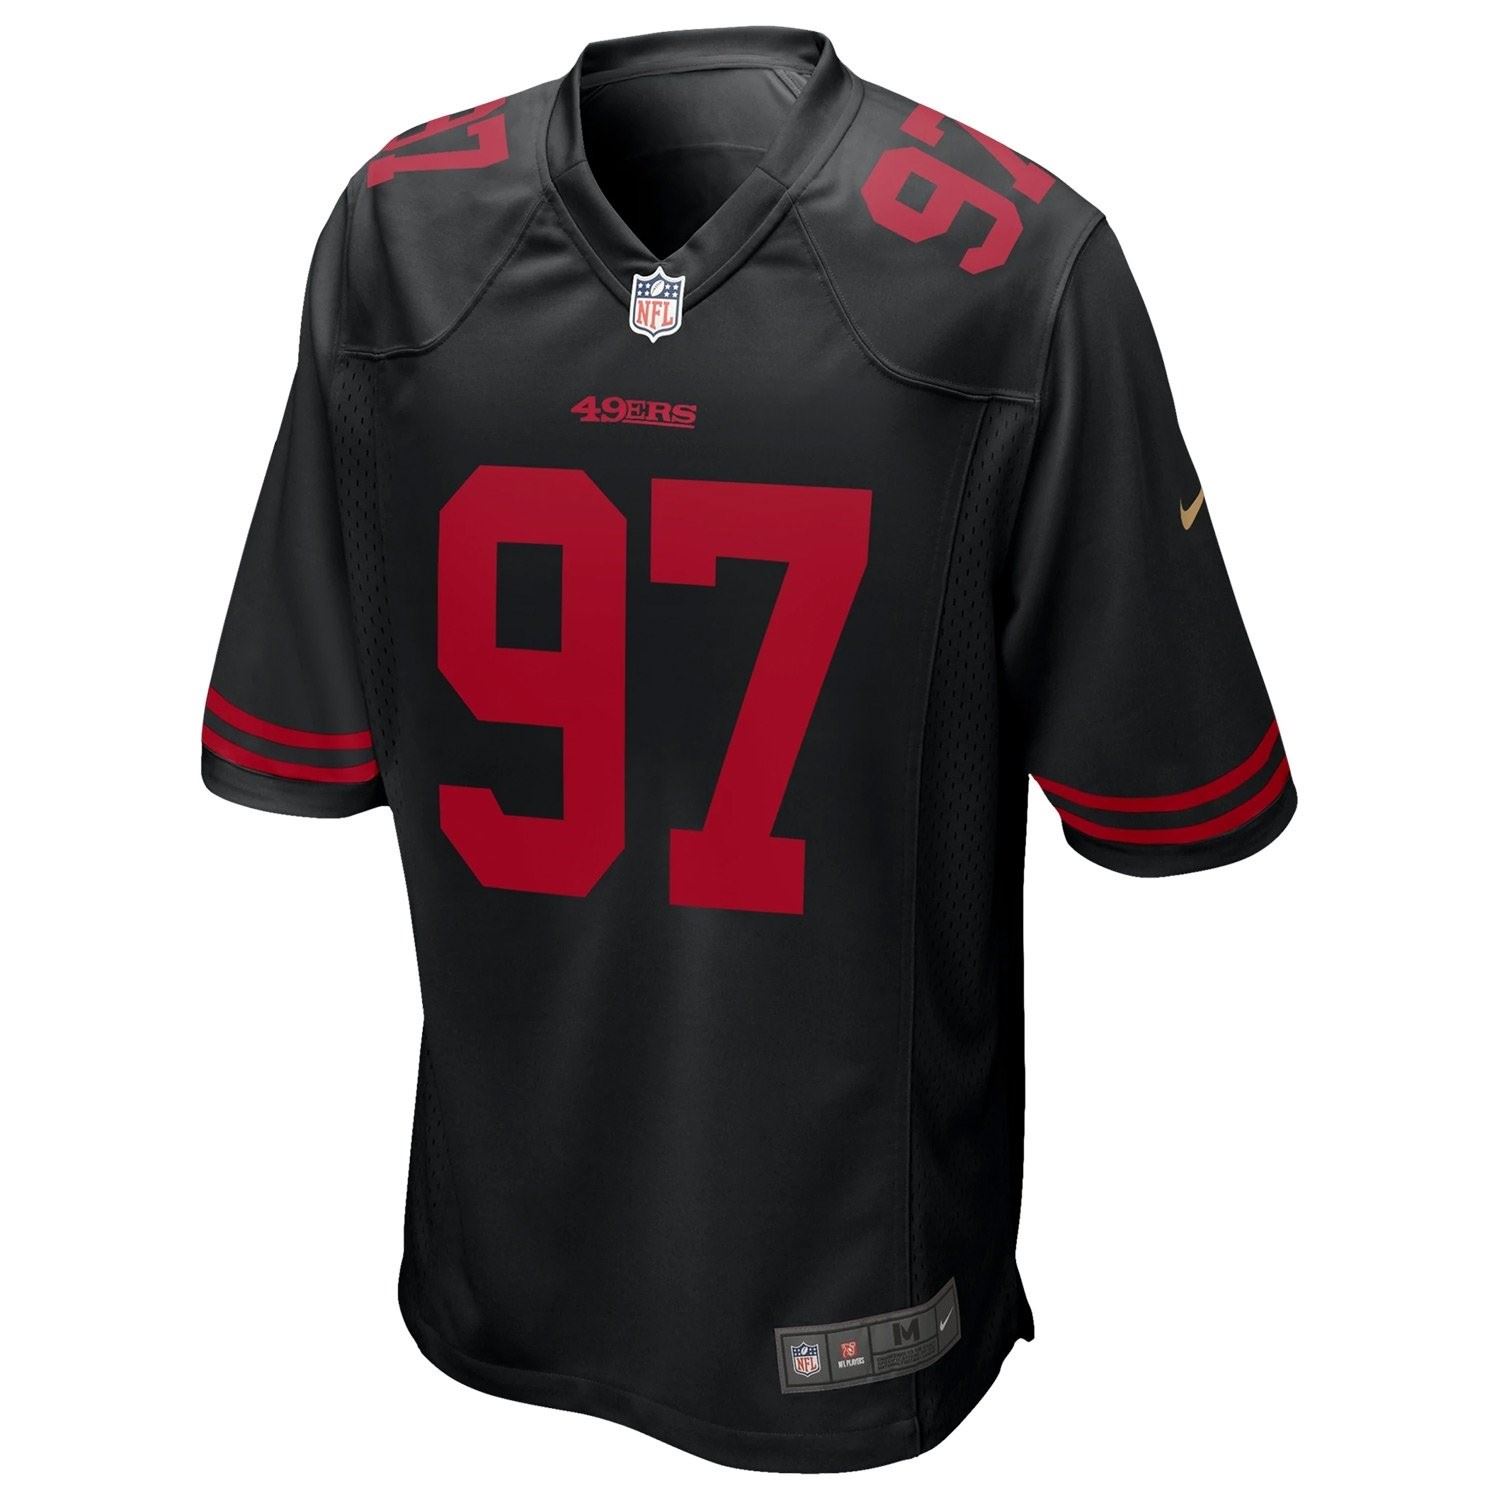 Nick Bosa #97 San Francisco 49ers  NFL Game Team colour Nike